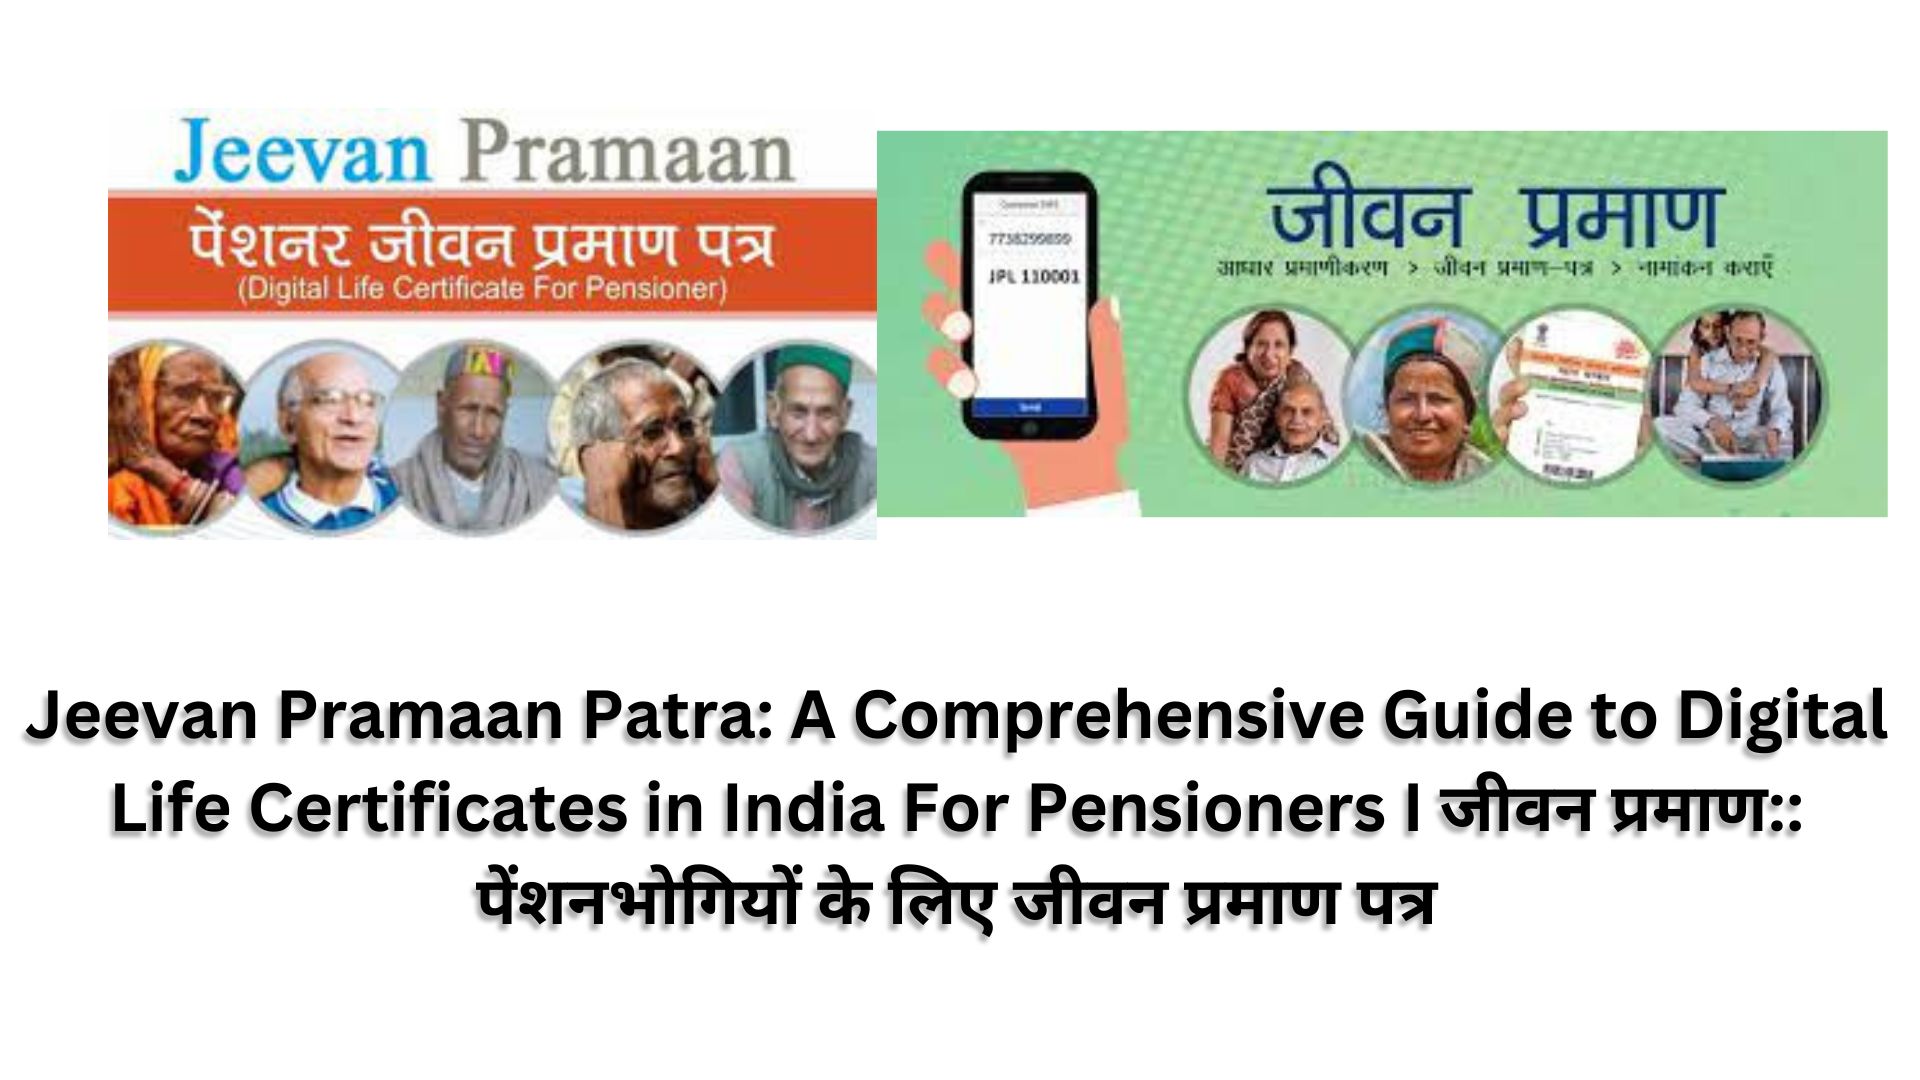 Jeevan Pramaan Patra: A Comprehensive Guide to Digital Life Certificates in India For Pensioners I जीवन प्रमाण:: पेंशनभोगियों के लिए जीवन प्रमाण पत्र